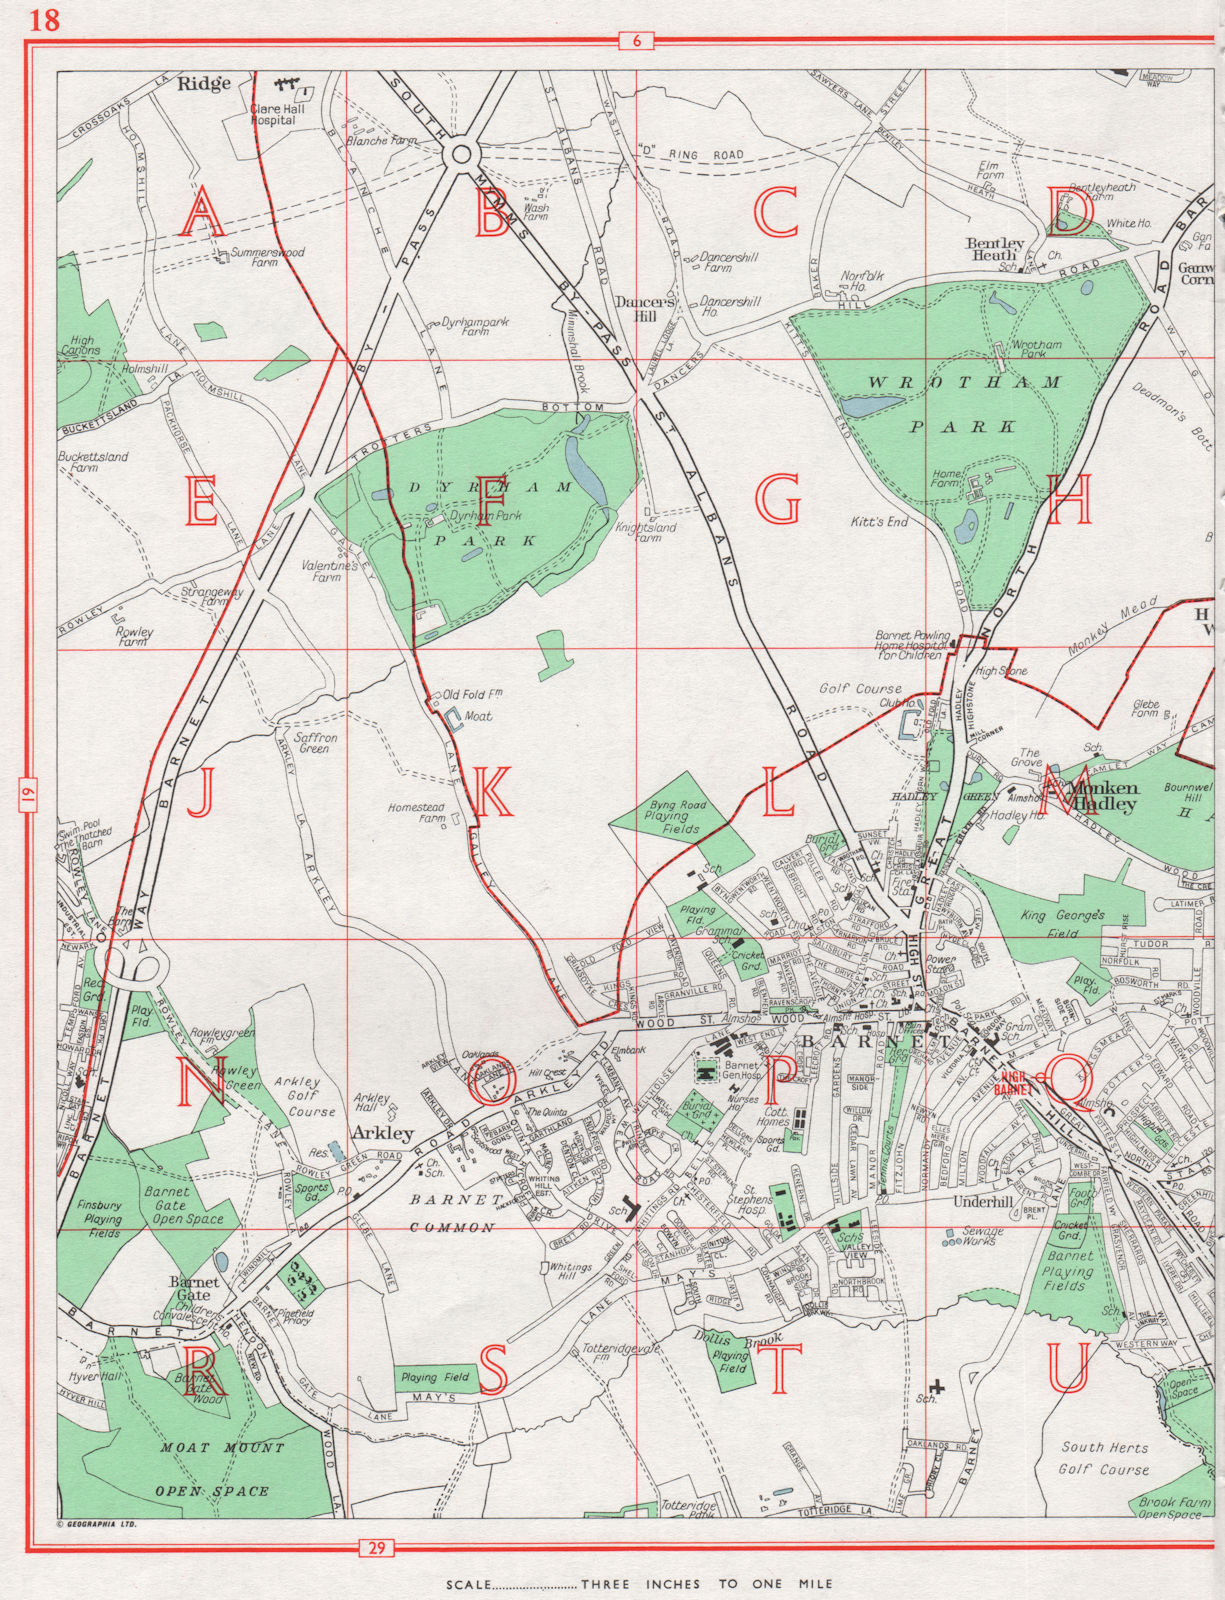 BARNET. Ridge Arkley Monken Hadley Totteridge High Barnet 1964 old vintage map